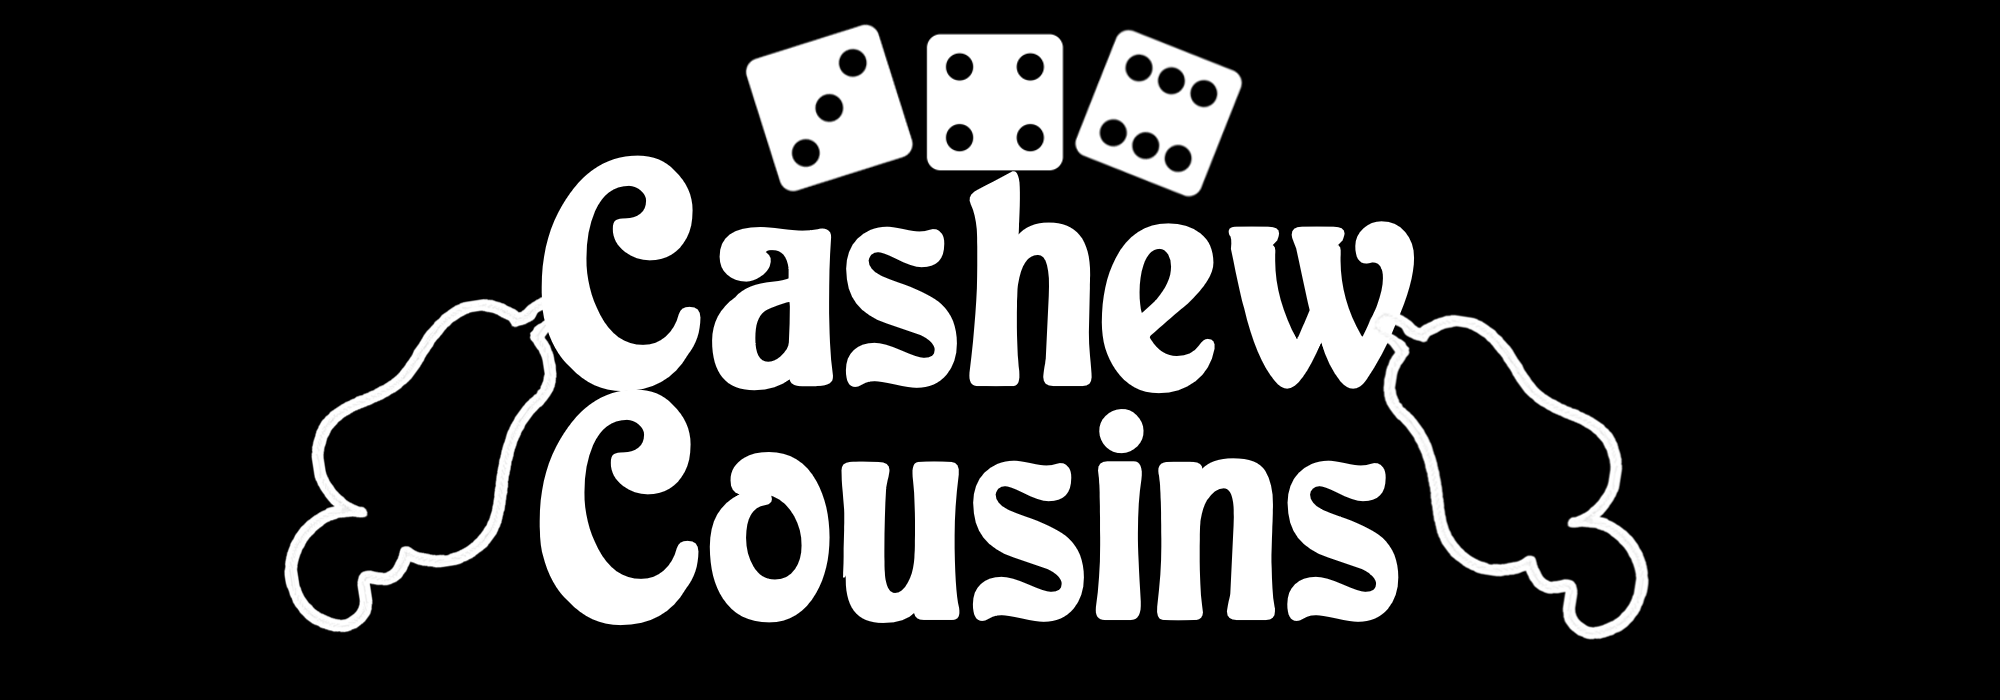 Cashew Cousins